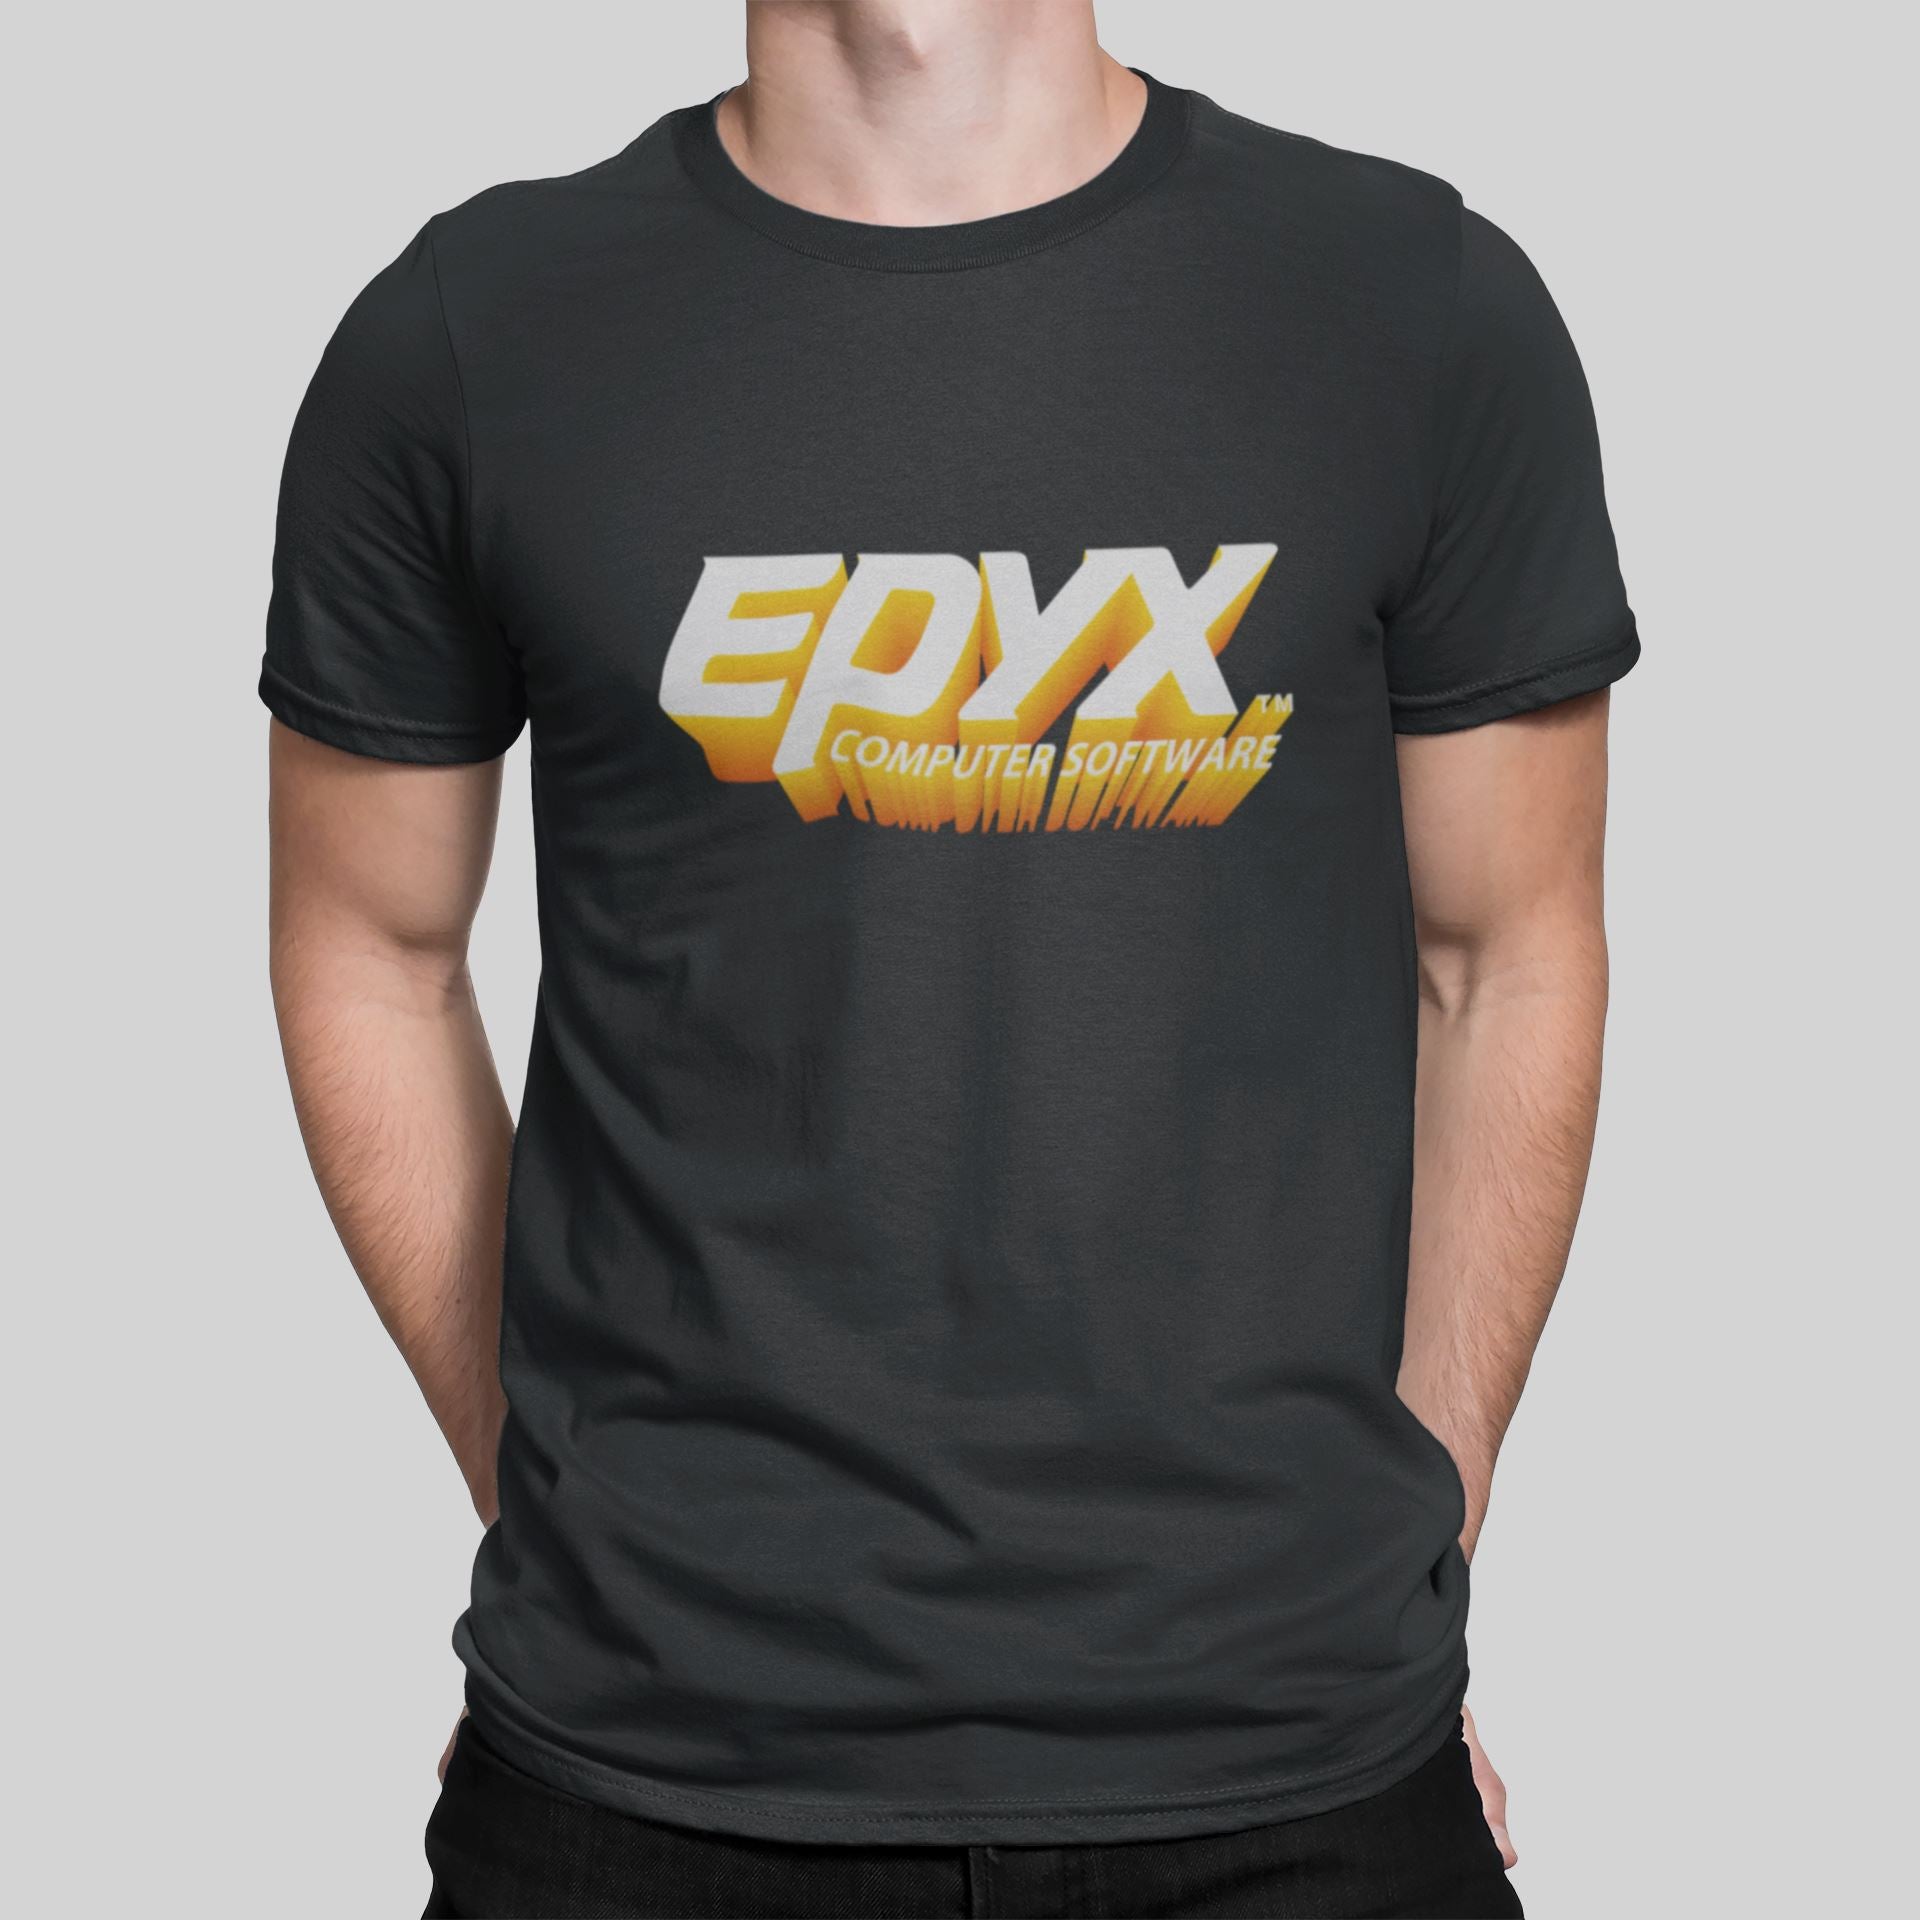 Epyx Software 3D Retro Gaming T-Shirt T-Shirt Seven Squared Small 34-36" Black 